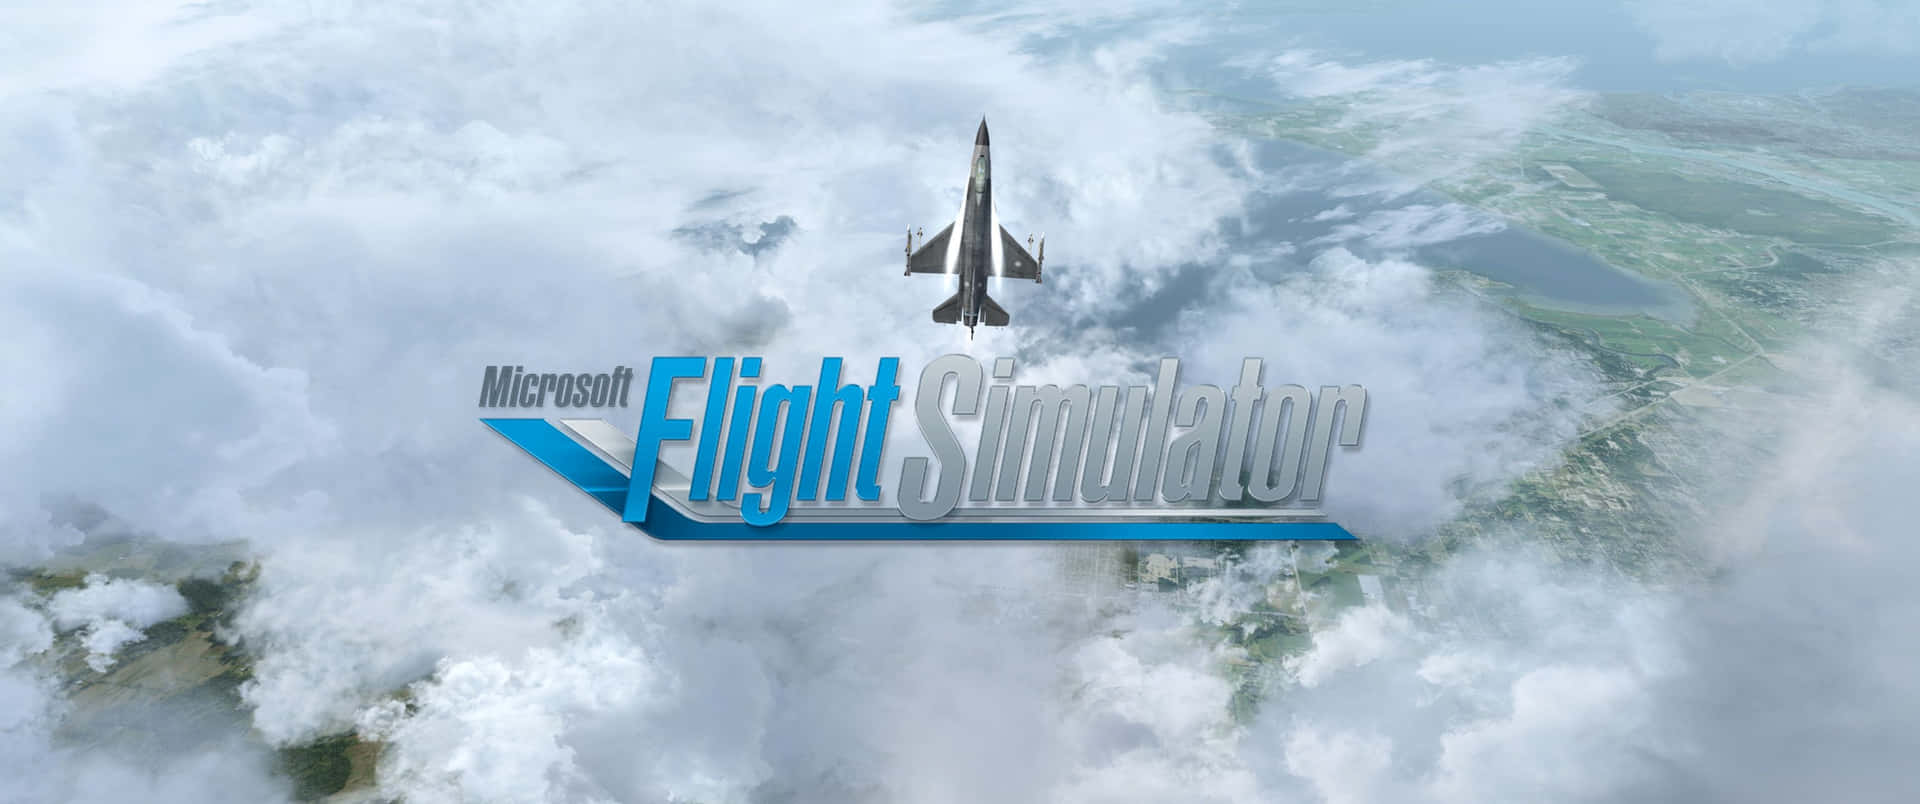 Explore the World with the Microsoft Flight Simulator